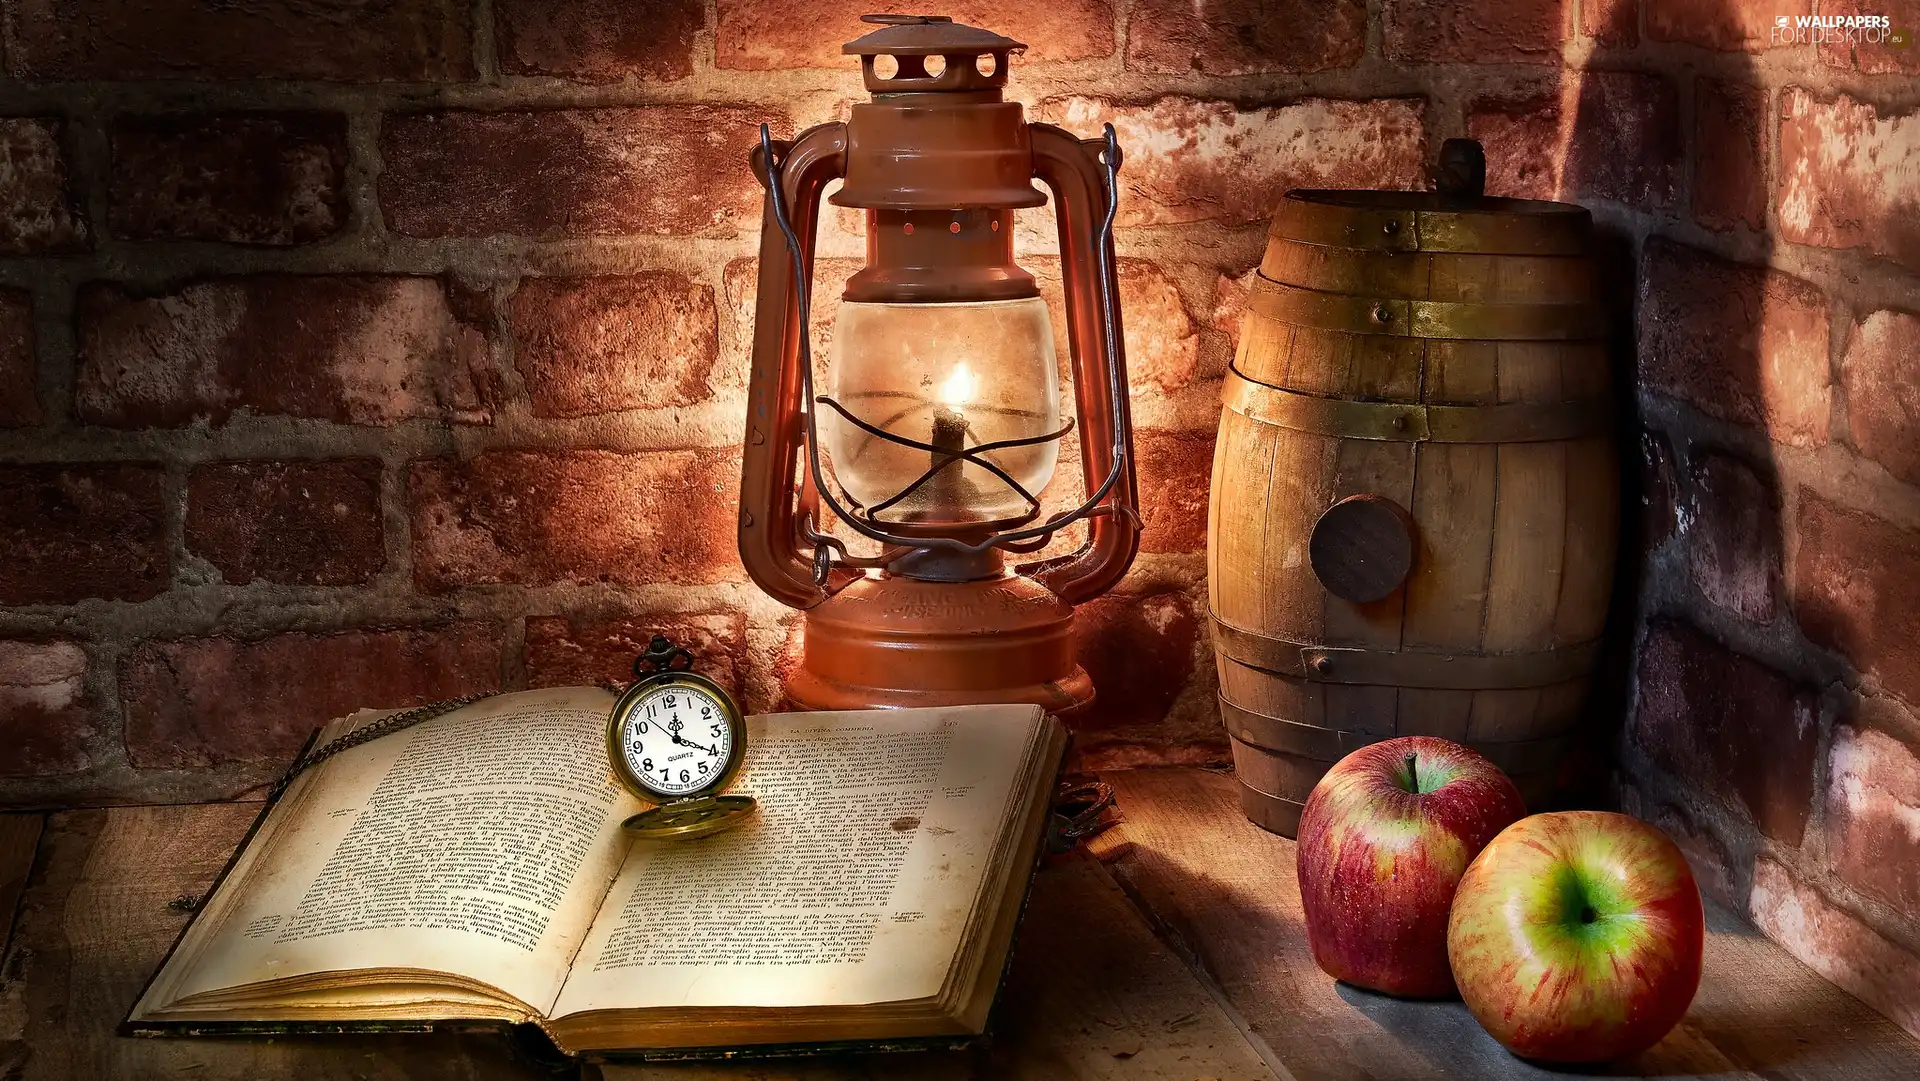 Watch, Lamp, apples, barrel, composition, Book, brick